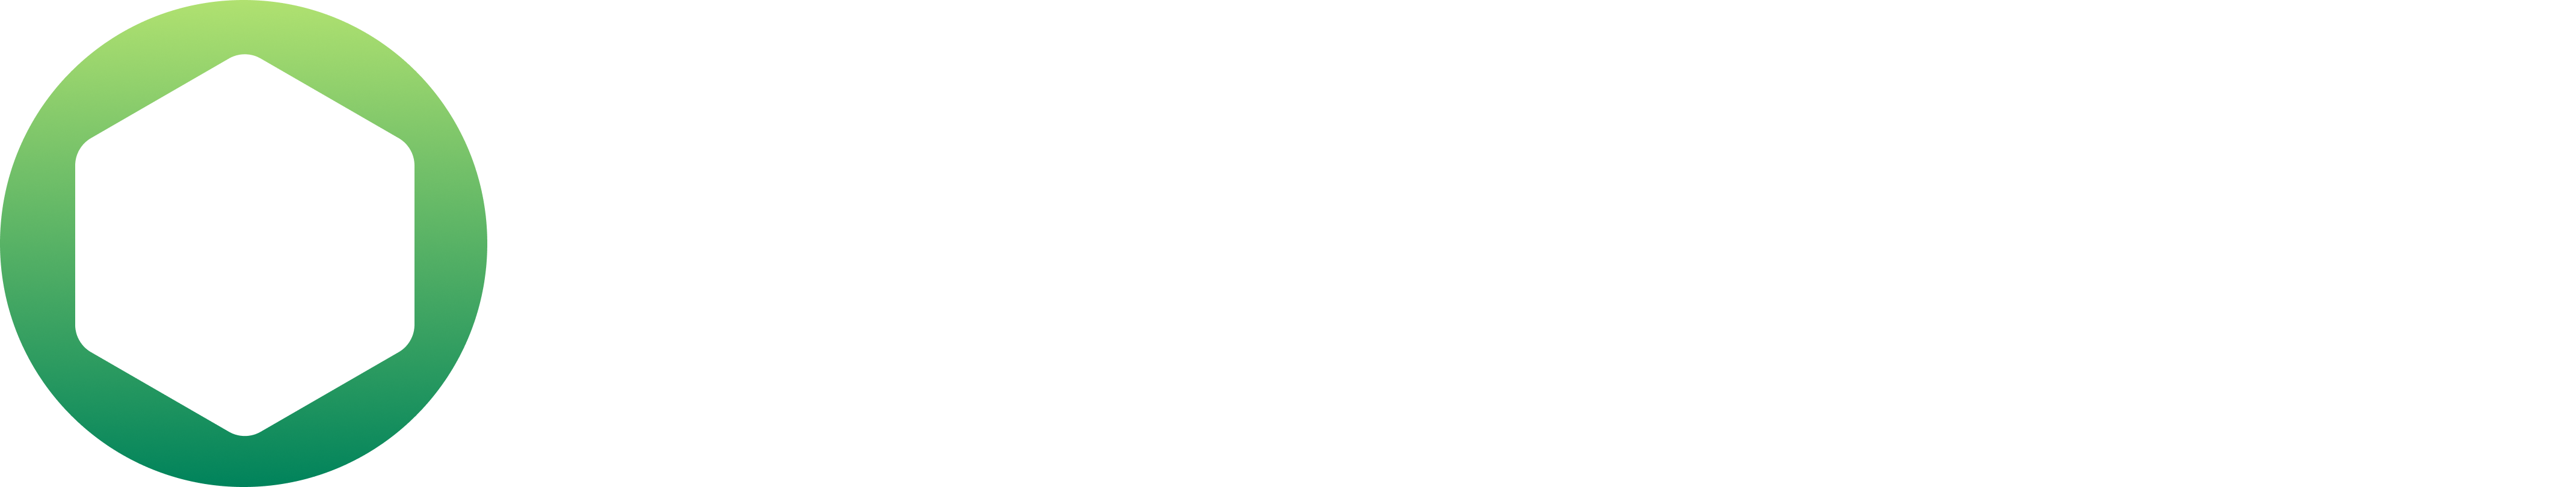 FINBOOT-Logo-04